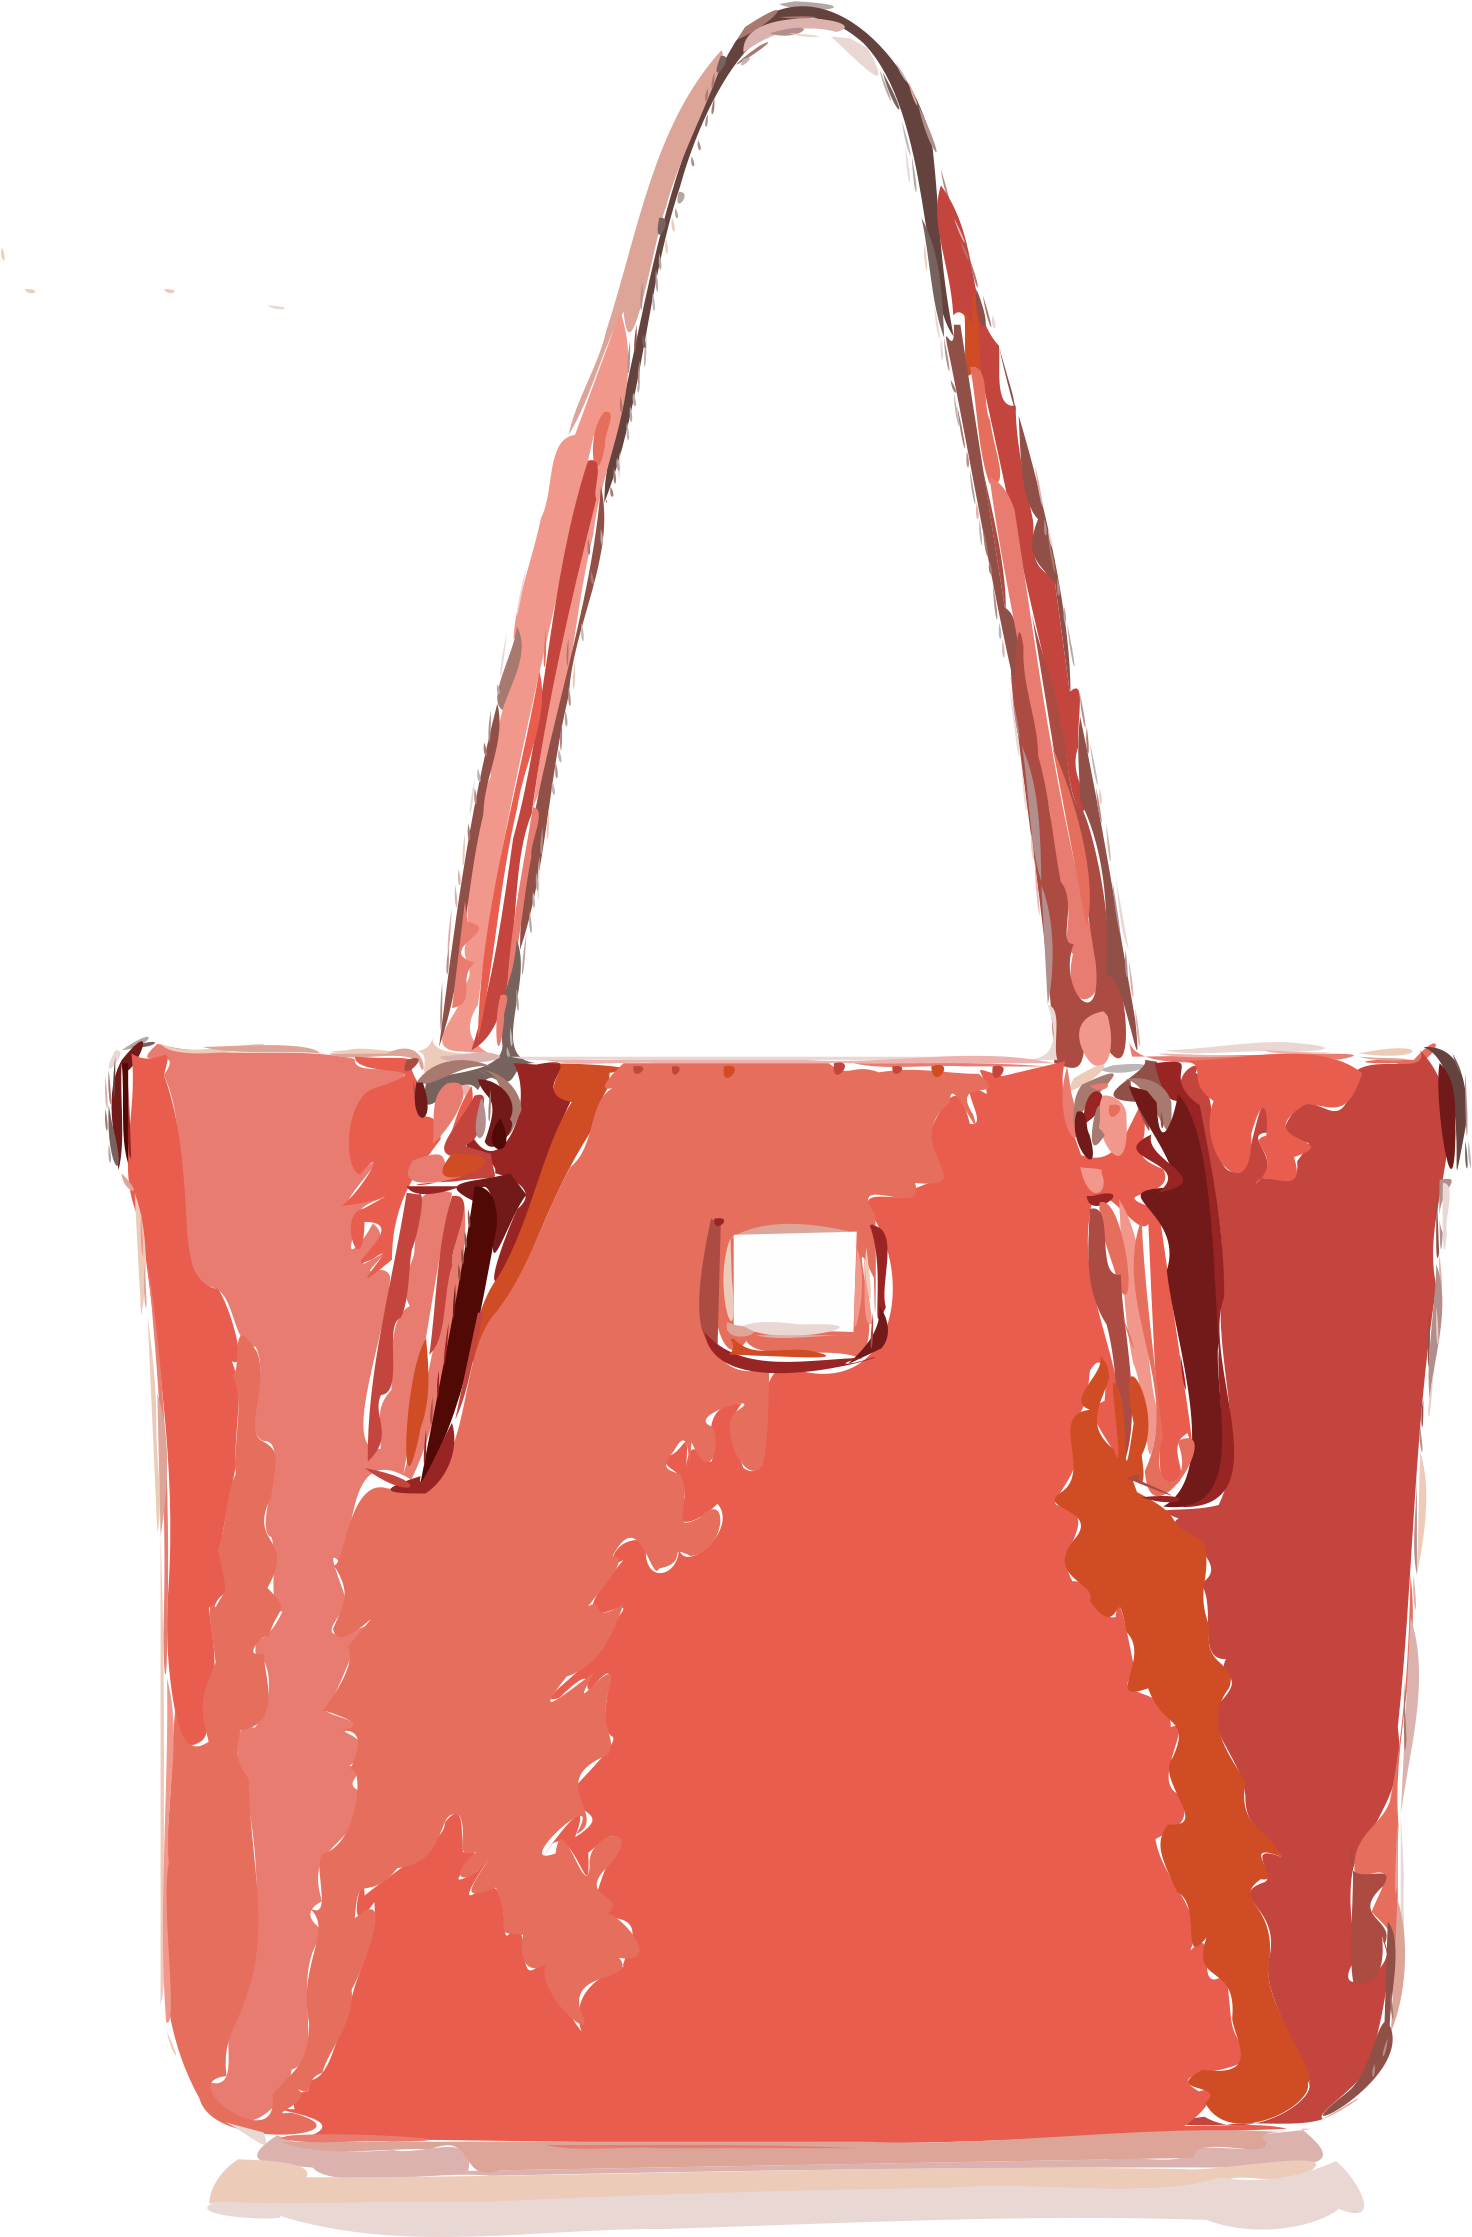 This Free Icons Png Design Of Orangish Red Handbag - Tote Bag Clipart (1619x2400), Png Download